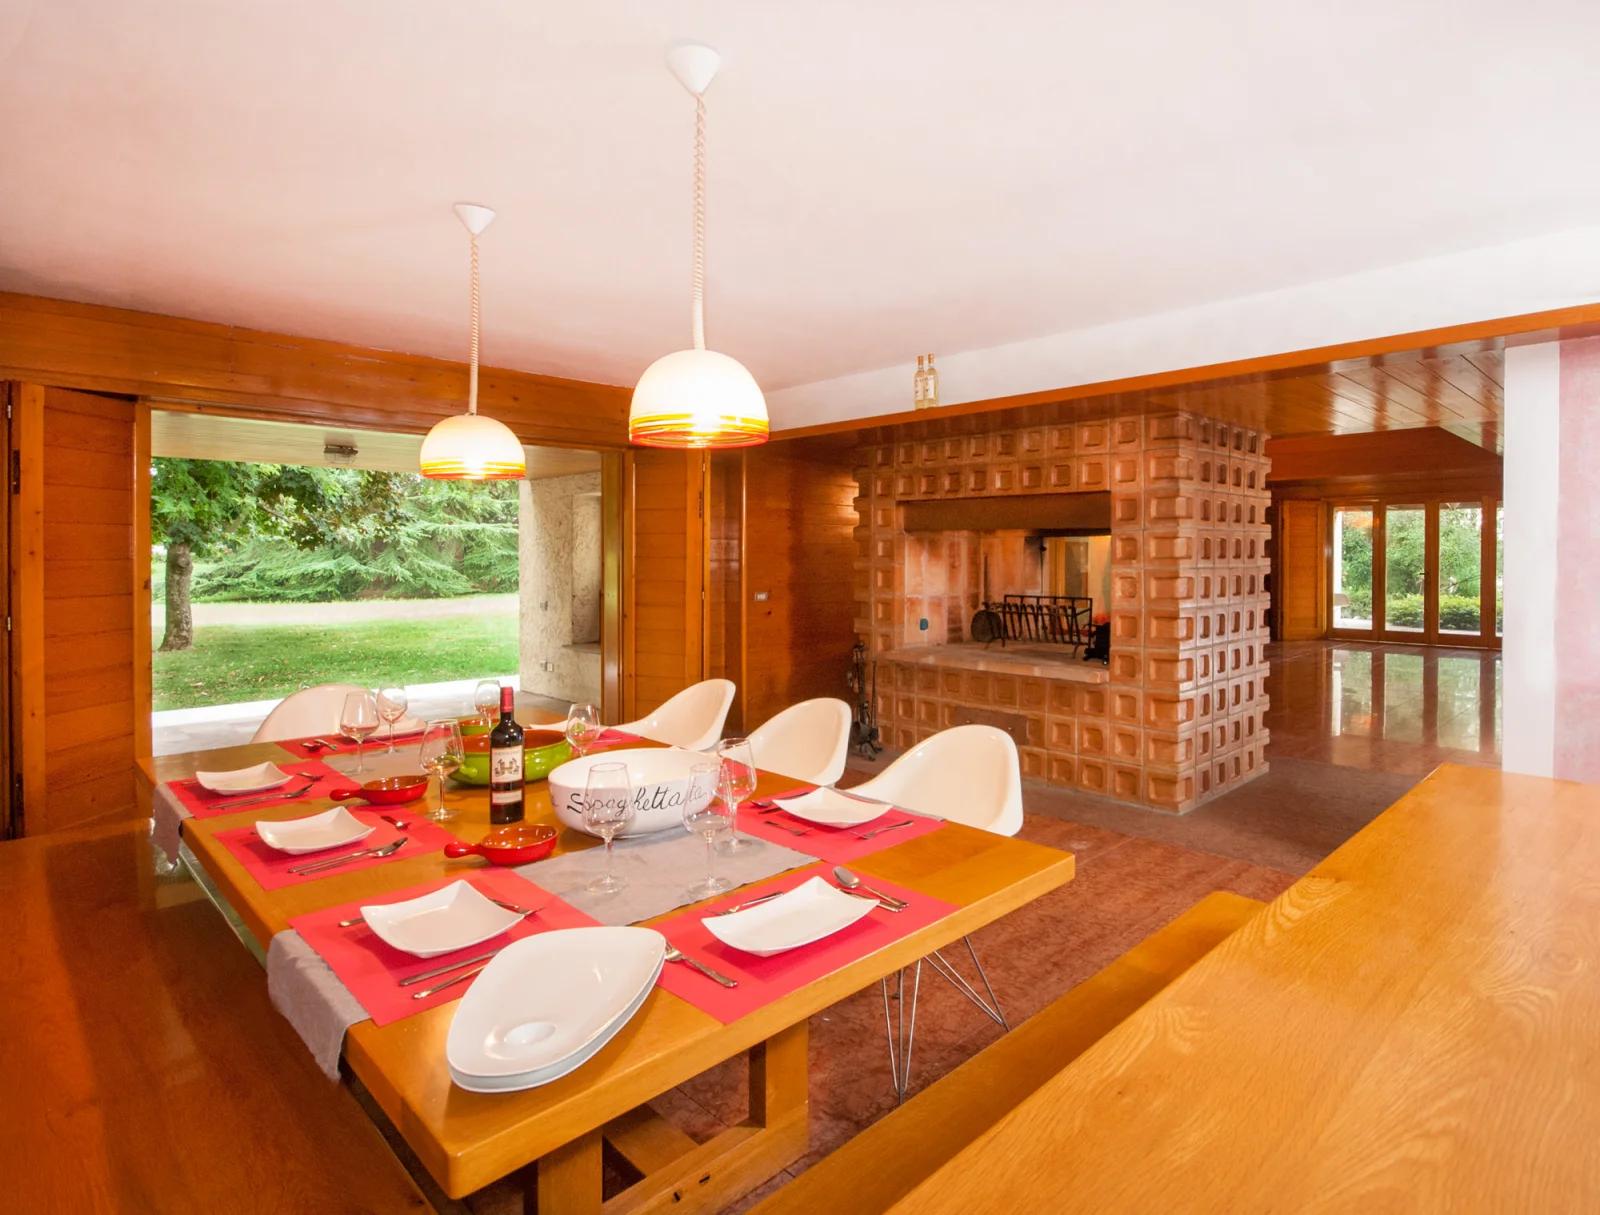 Comedor dentro Casa moderna y orgánica diseñada por un arquitecto - 1